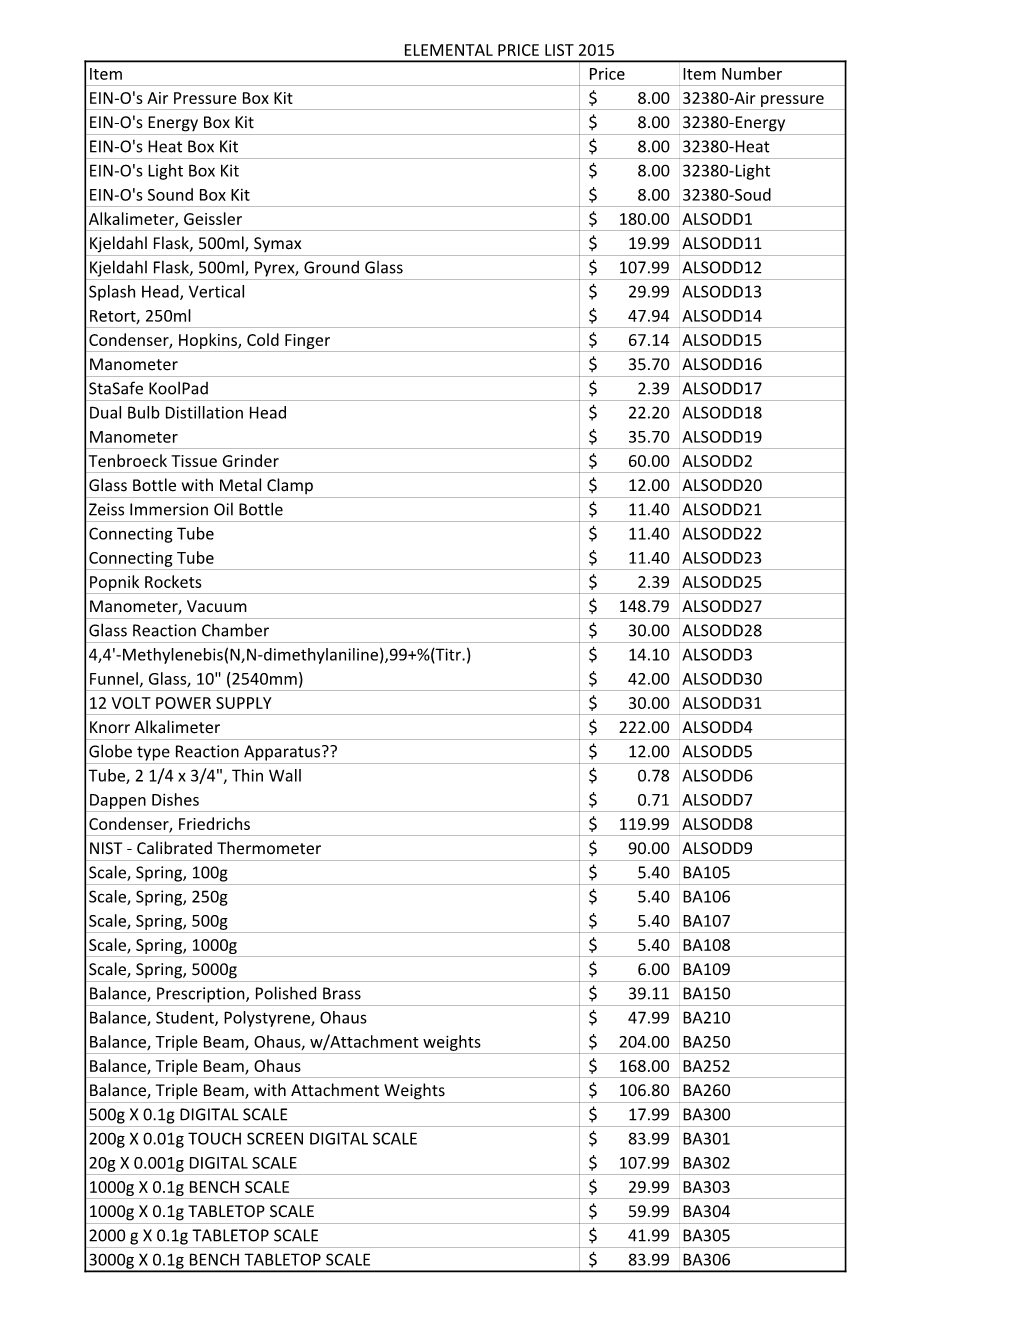 Elemental Price List 2015.Xlsx